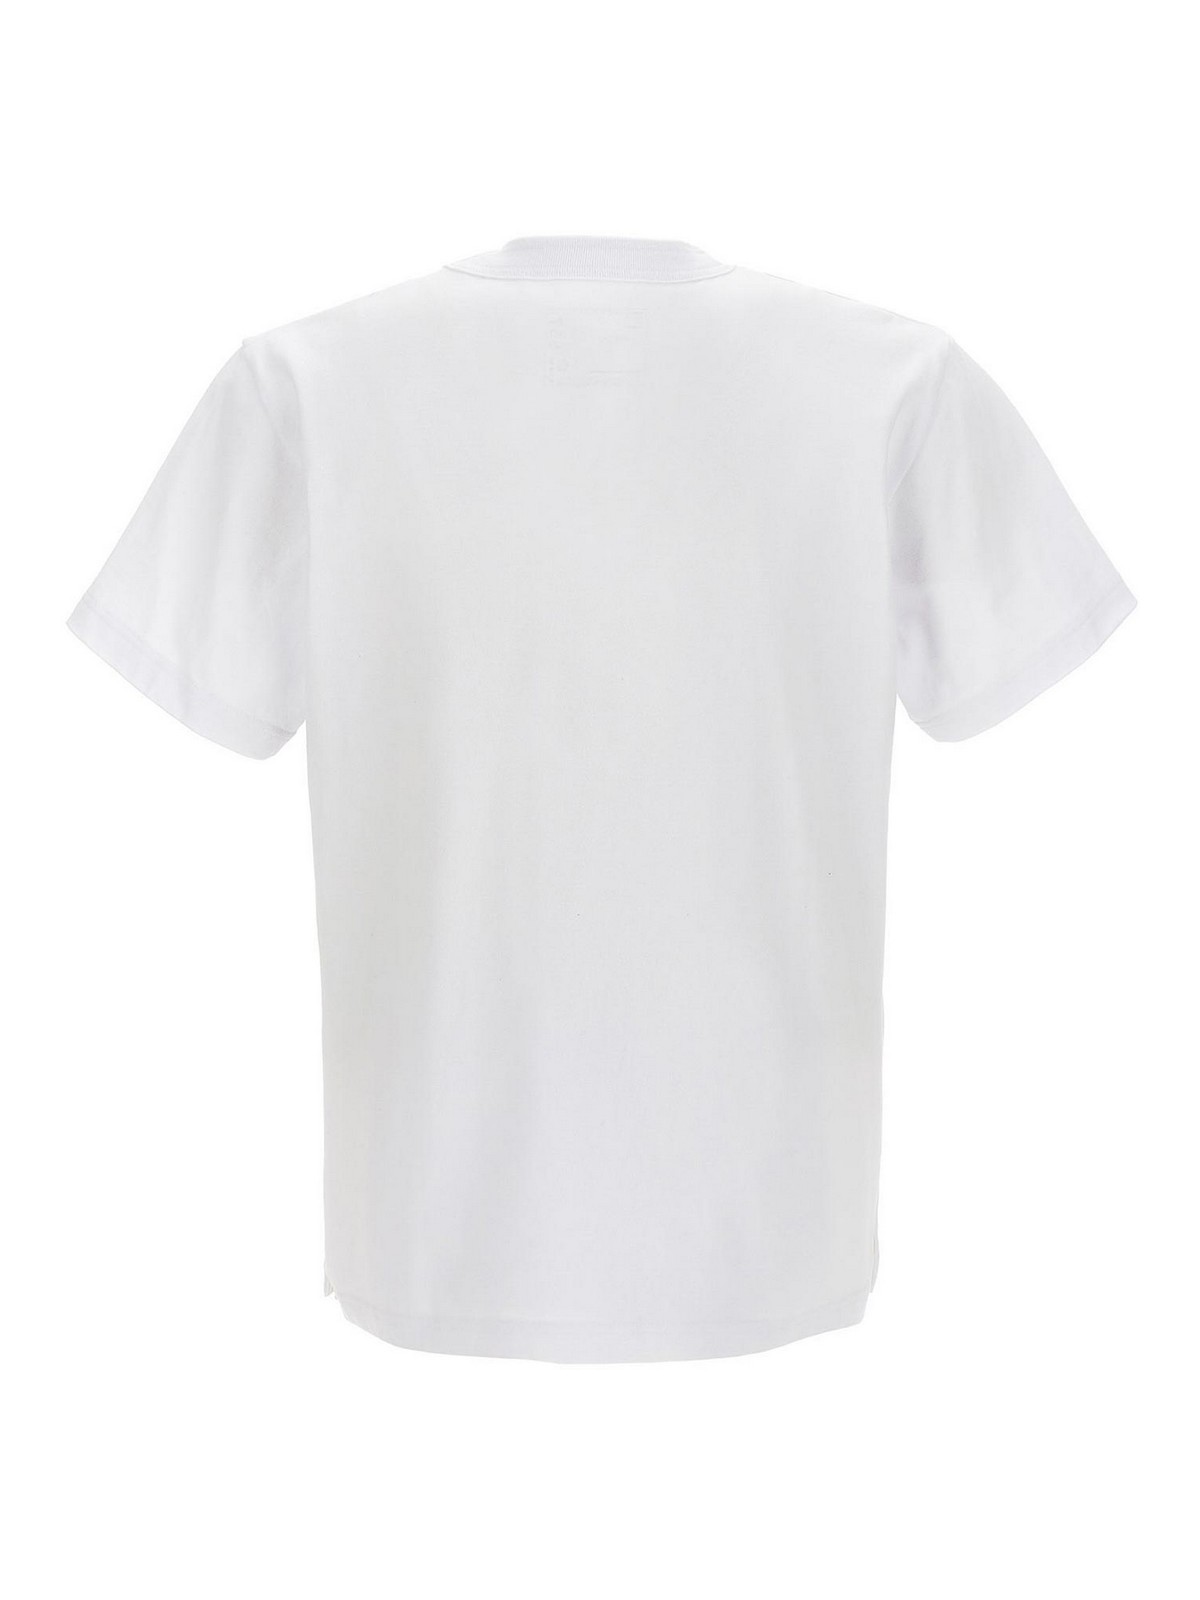 T-shirts Sacai - T-shirt sacai x carhartt wip - 230557S101 | thebs.com